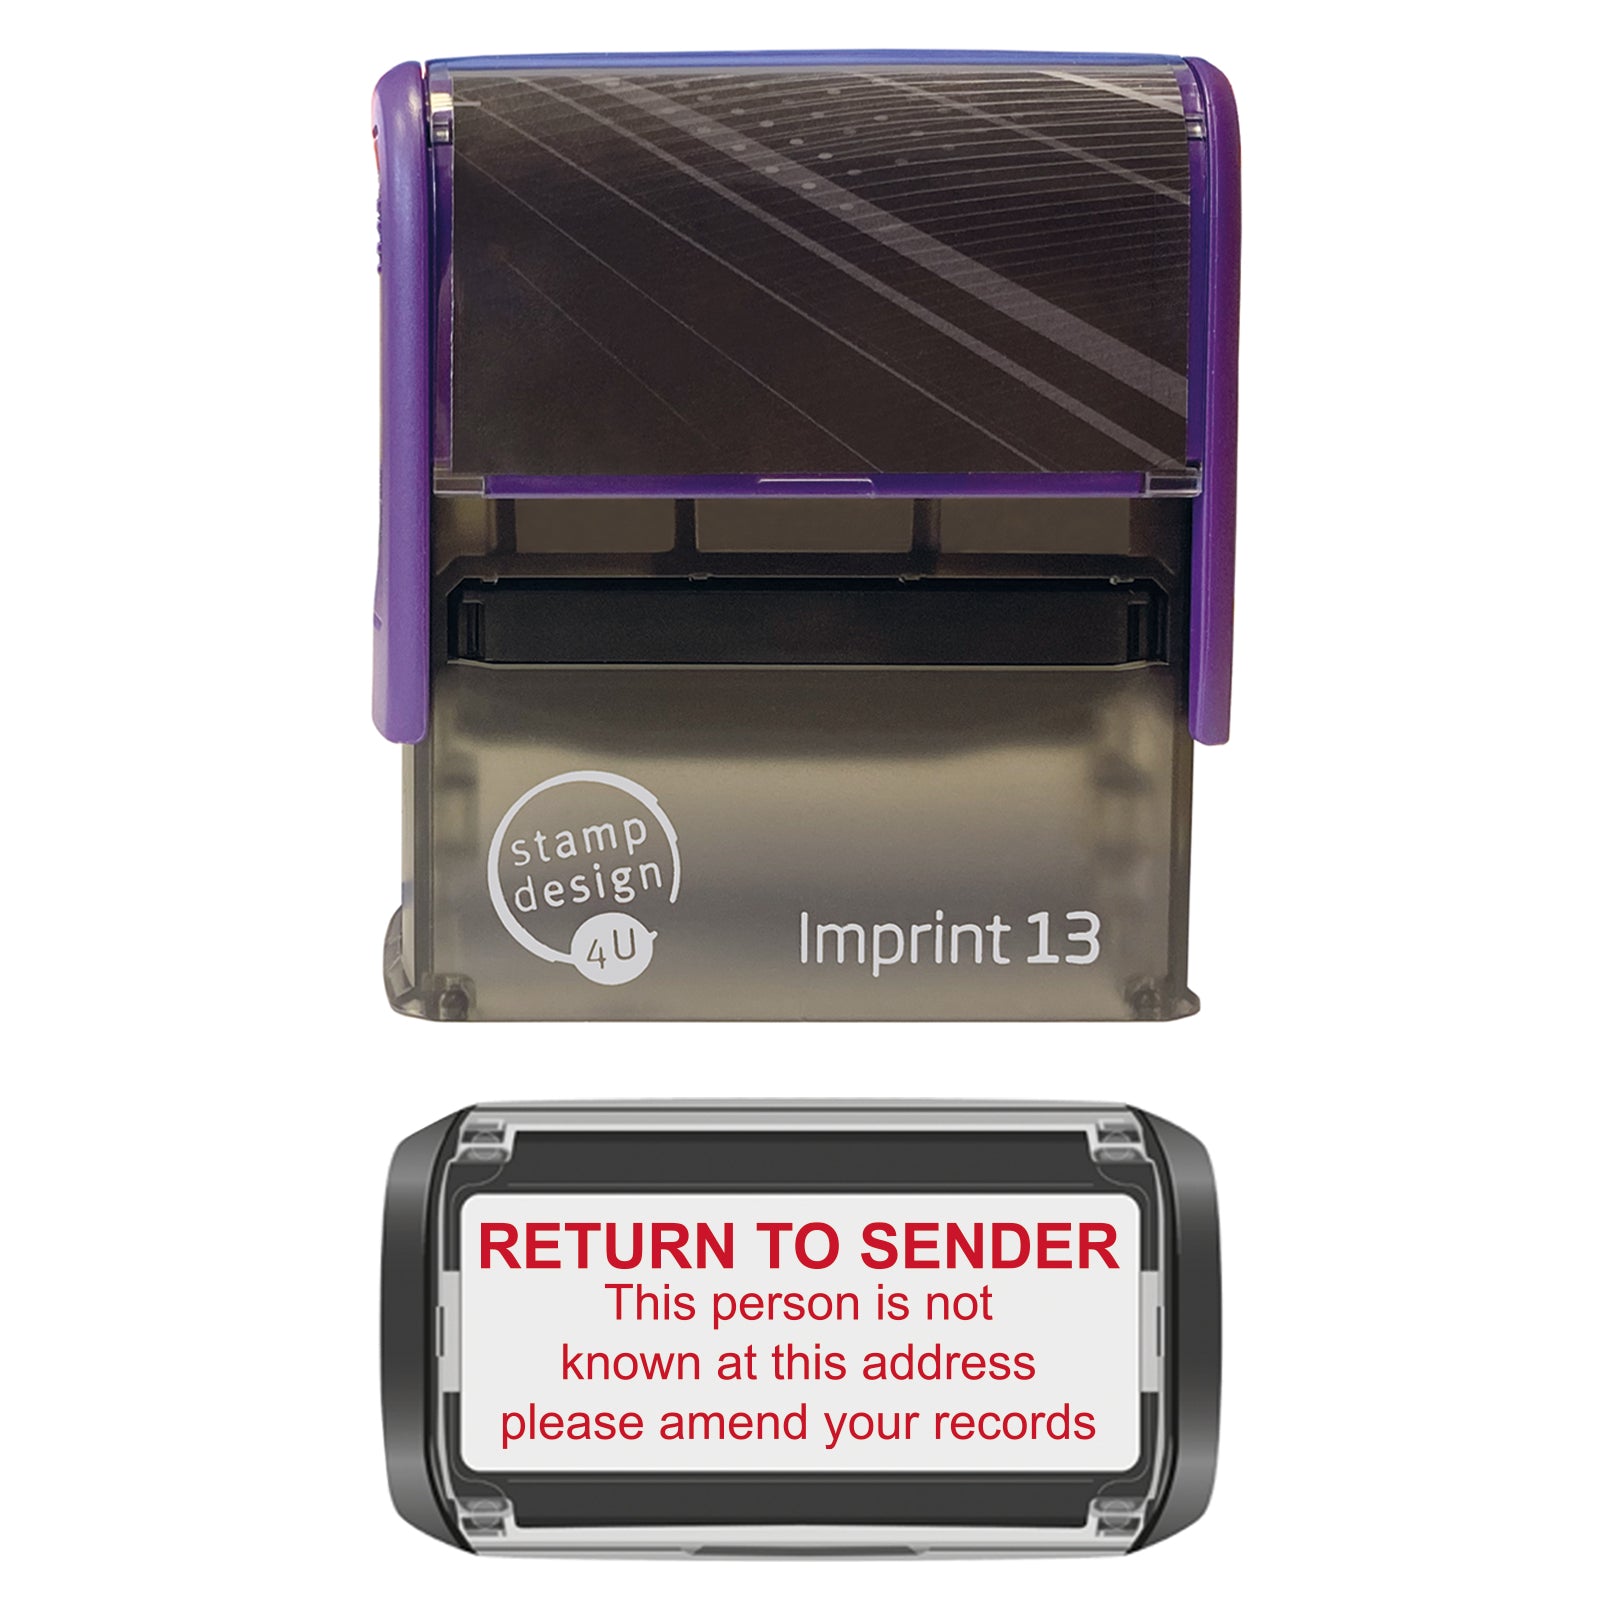 Return to Sender Stamp | Stop Junk Mail Stamp | 58 x 22mm Red or Black Ink